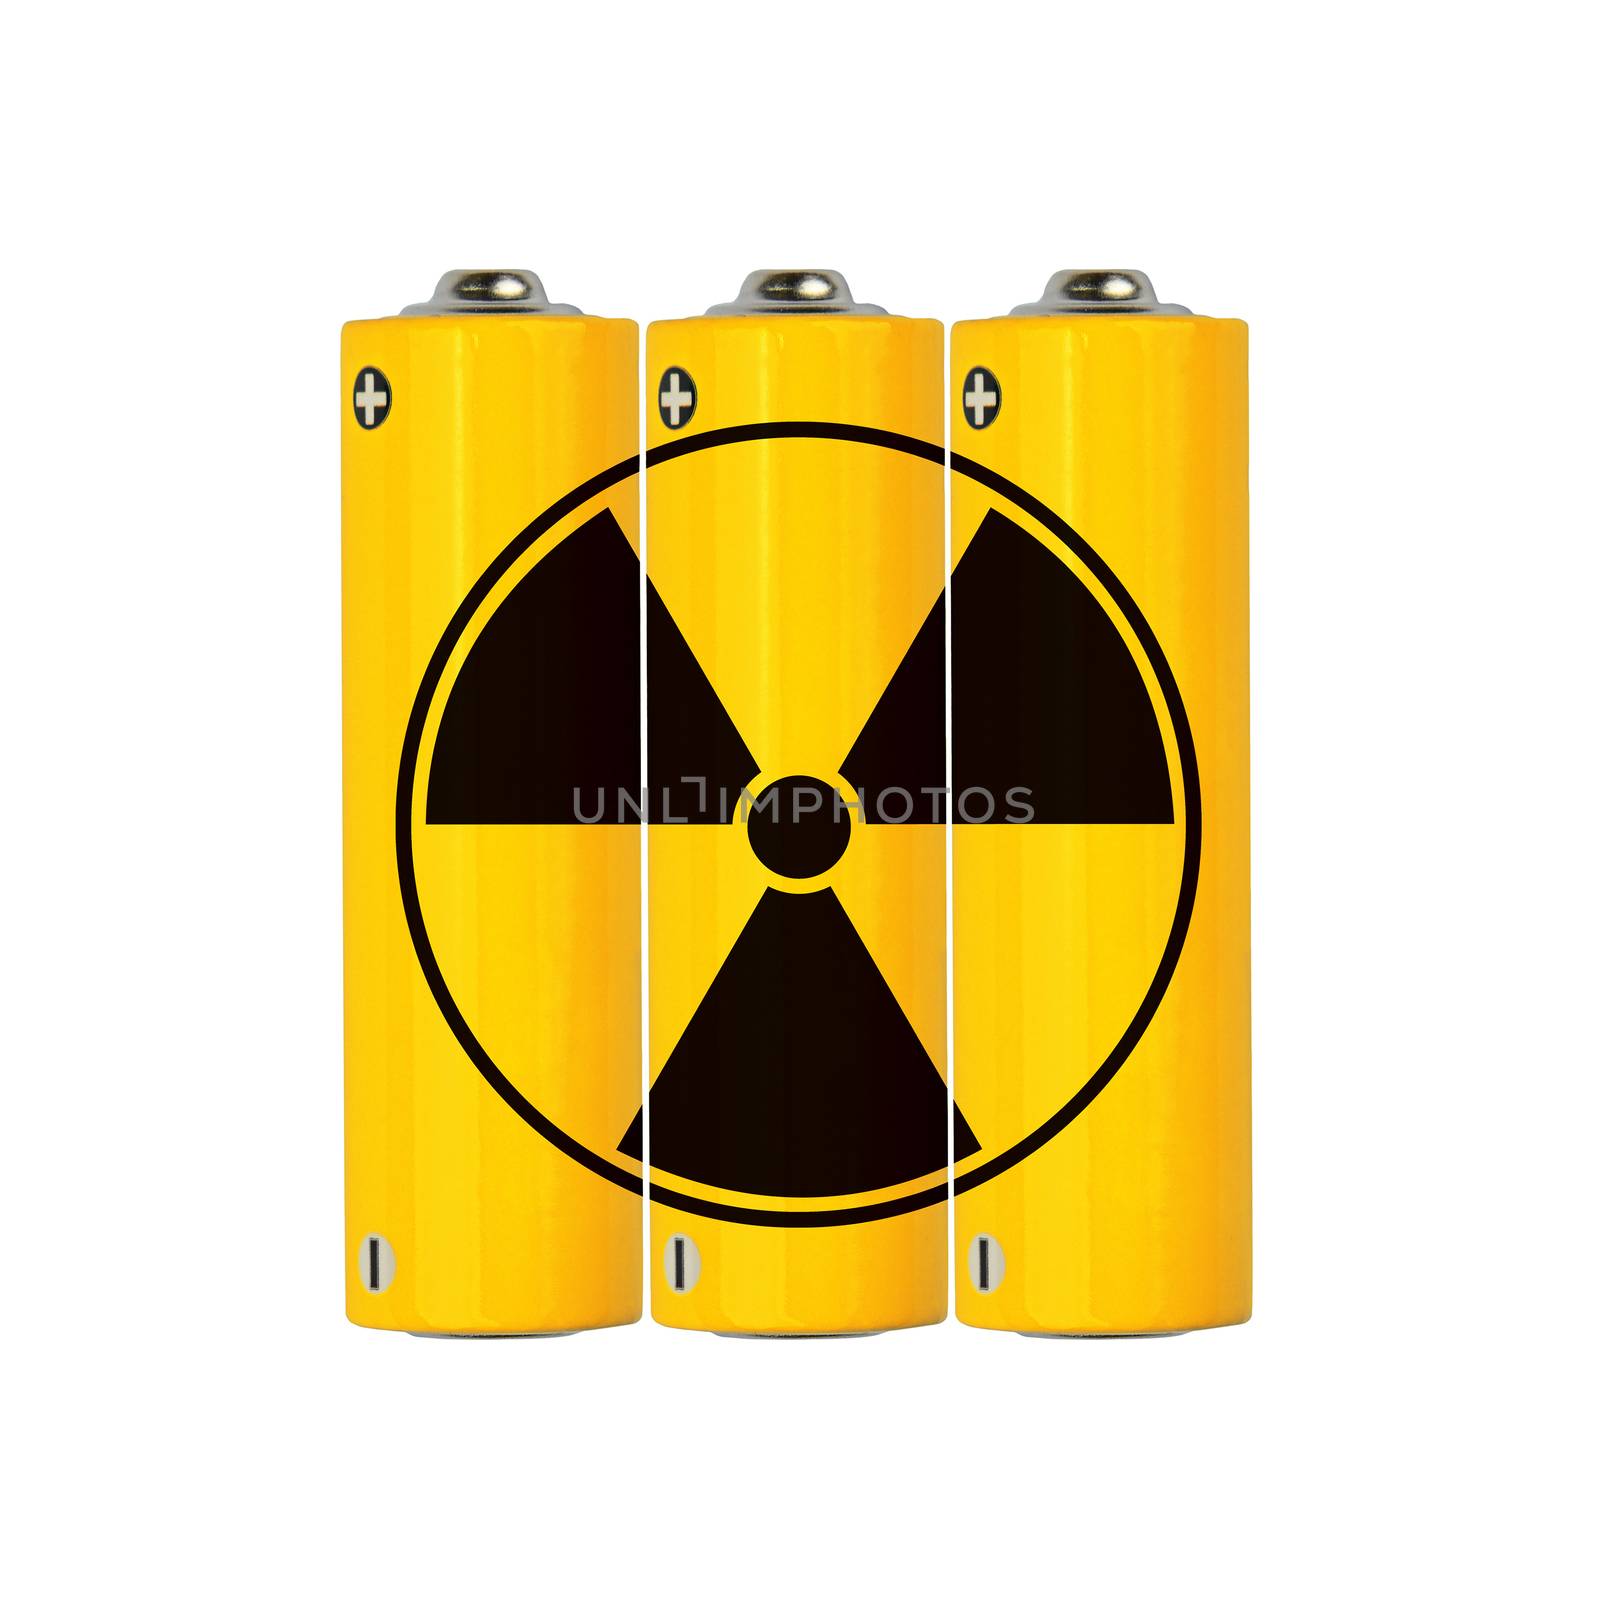 Yellow alkaline AA batteries with radioactive sign by BreakingTheWalls